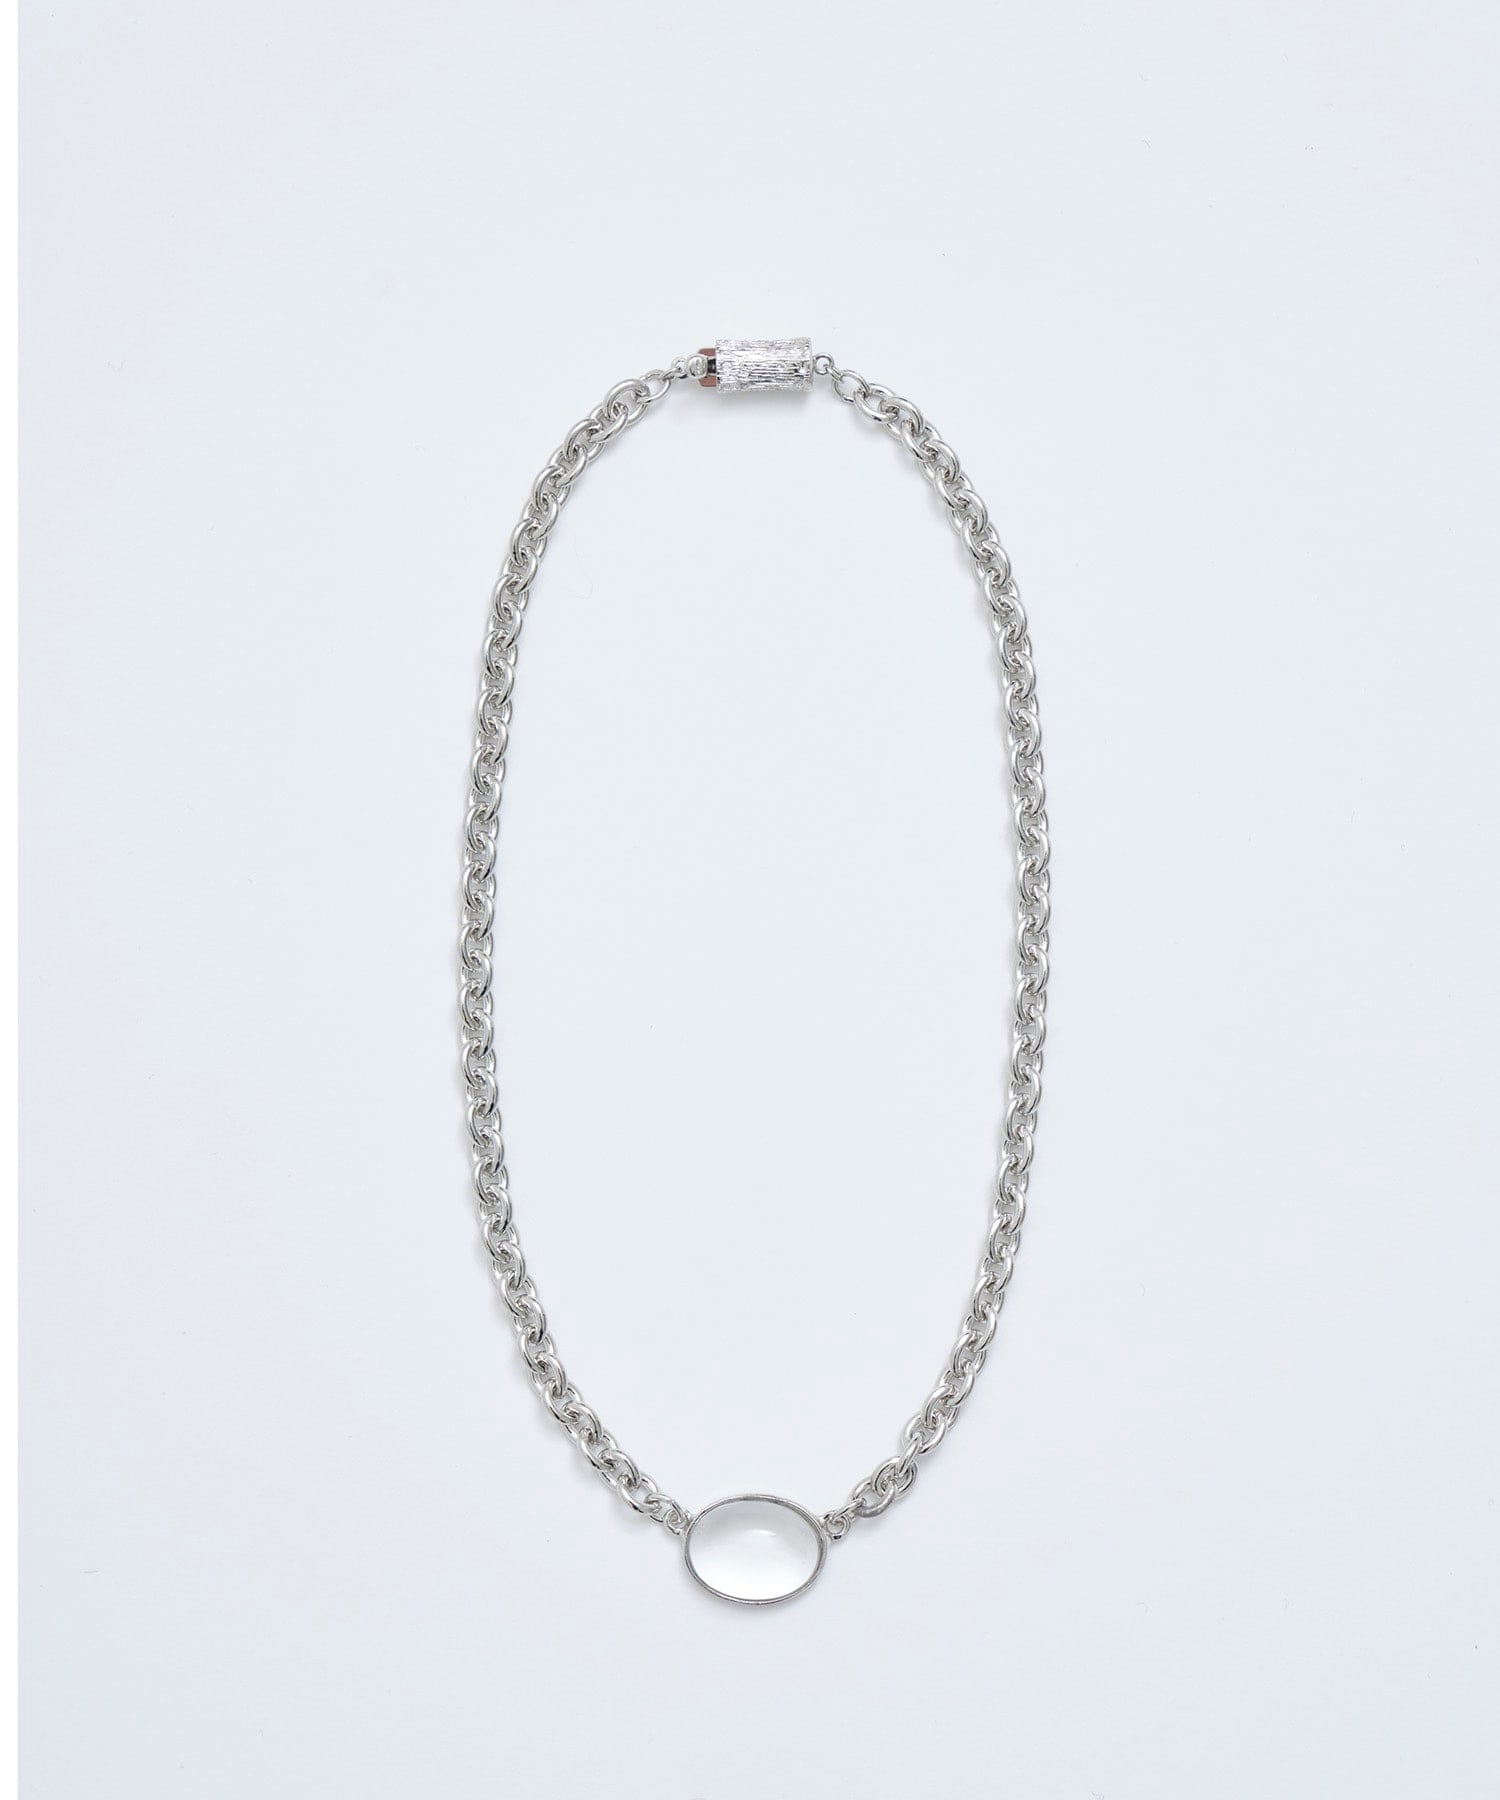 chain necklace balance